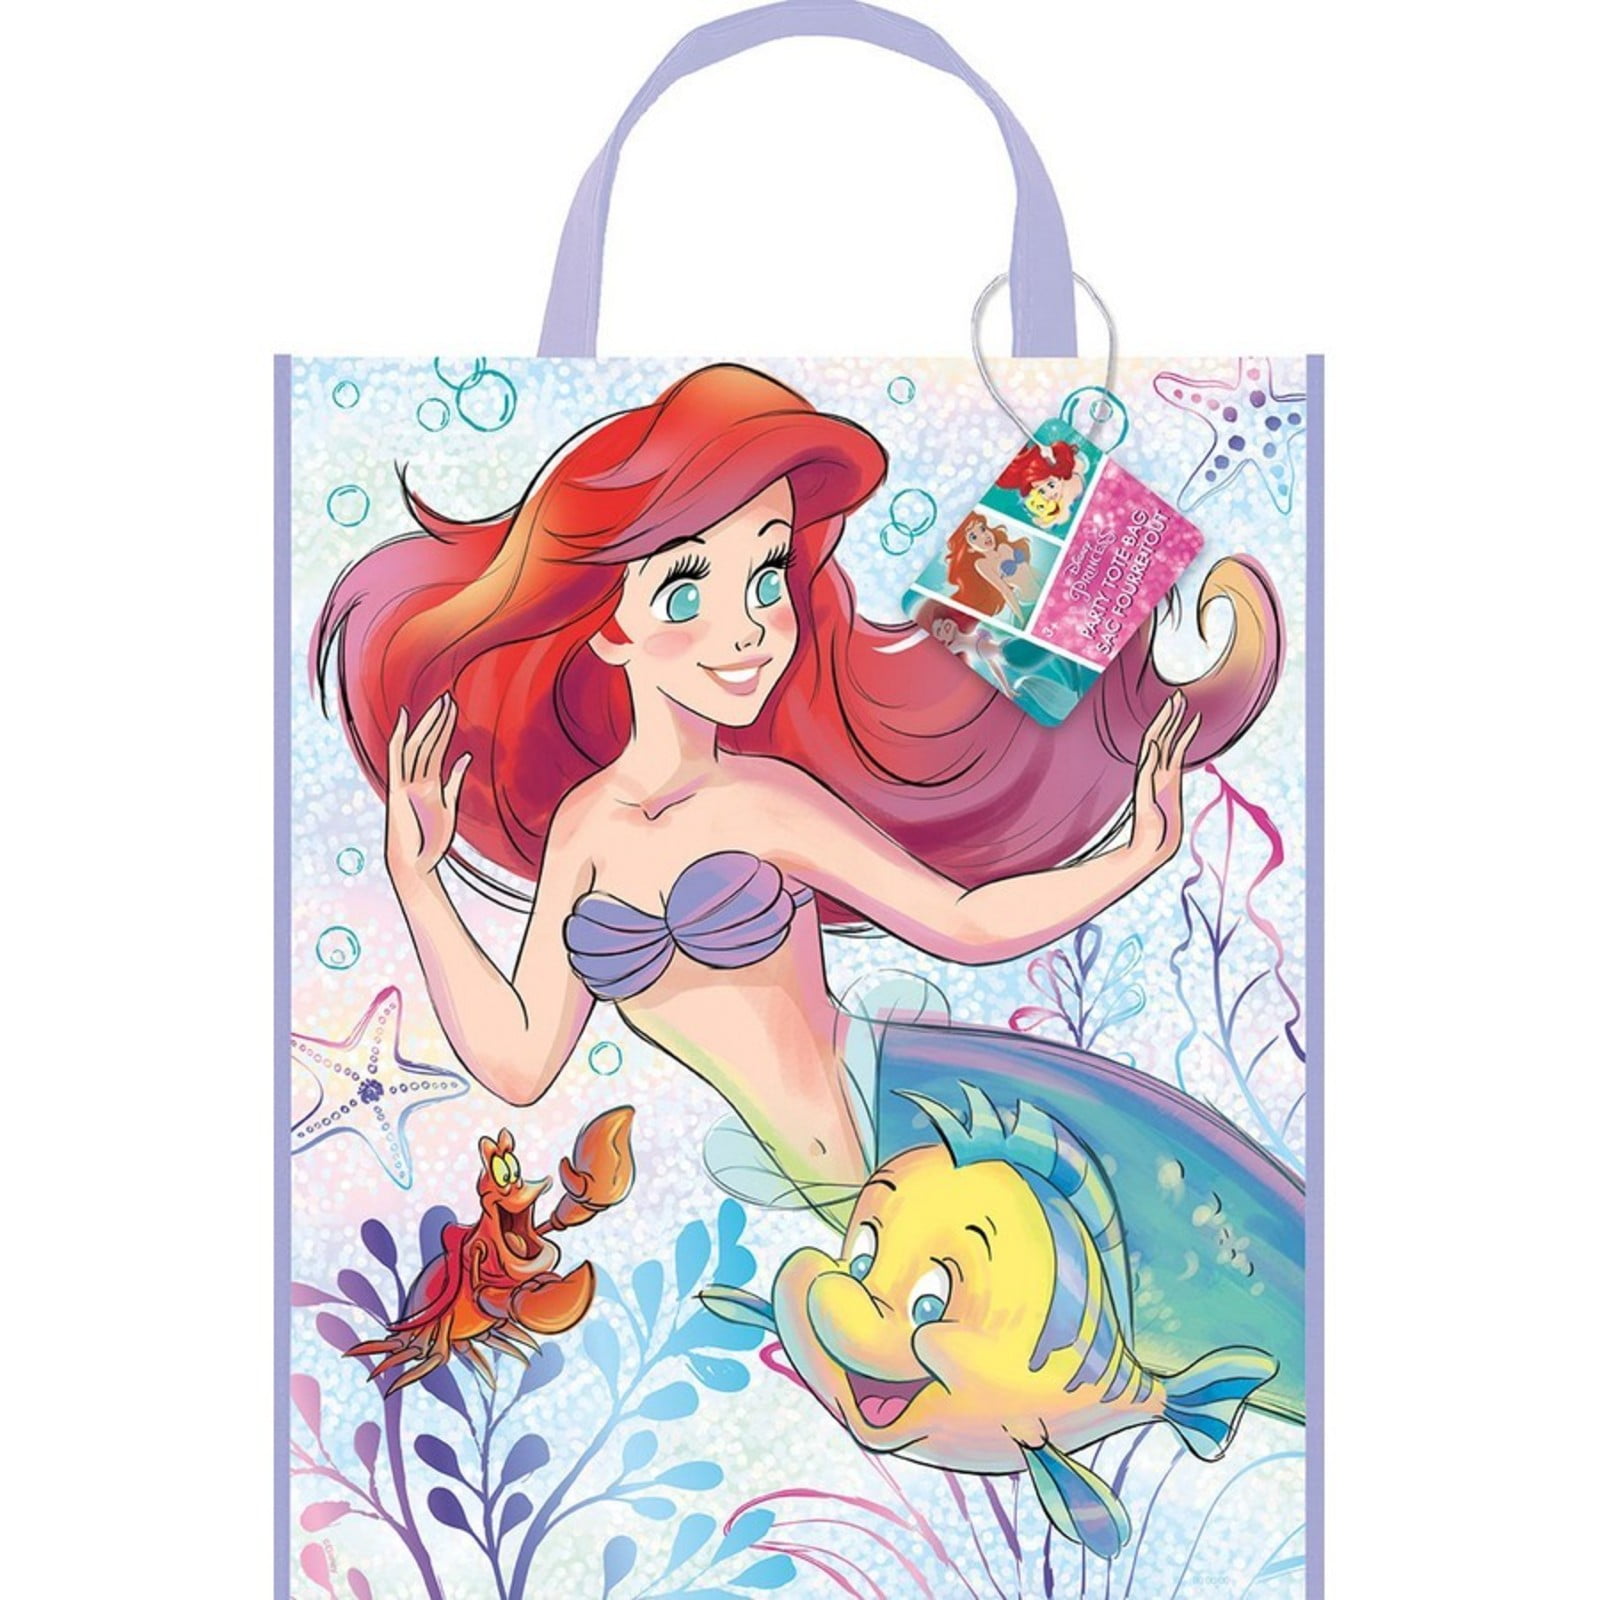 Ariel The Little Mermaid Reusable Shopping / Tote Bag NWT Disney Princesses 